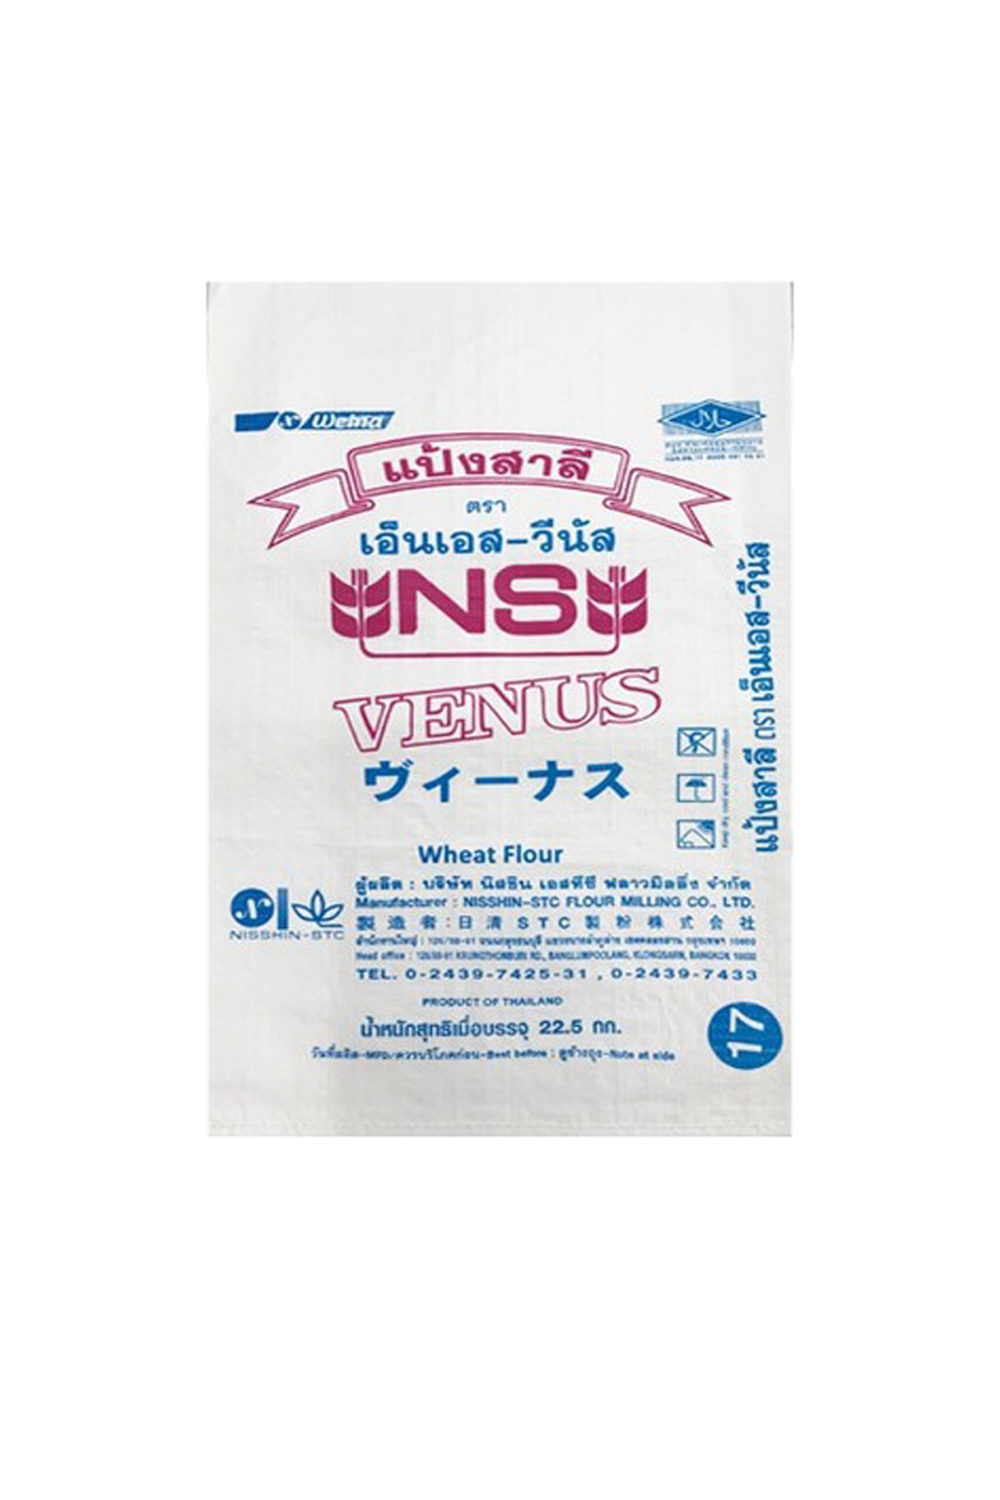 Nisshin NS-Venus แป้งขนมปังญี่ปุ่น(ไม่ขัดสี)